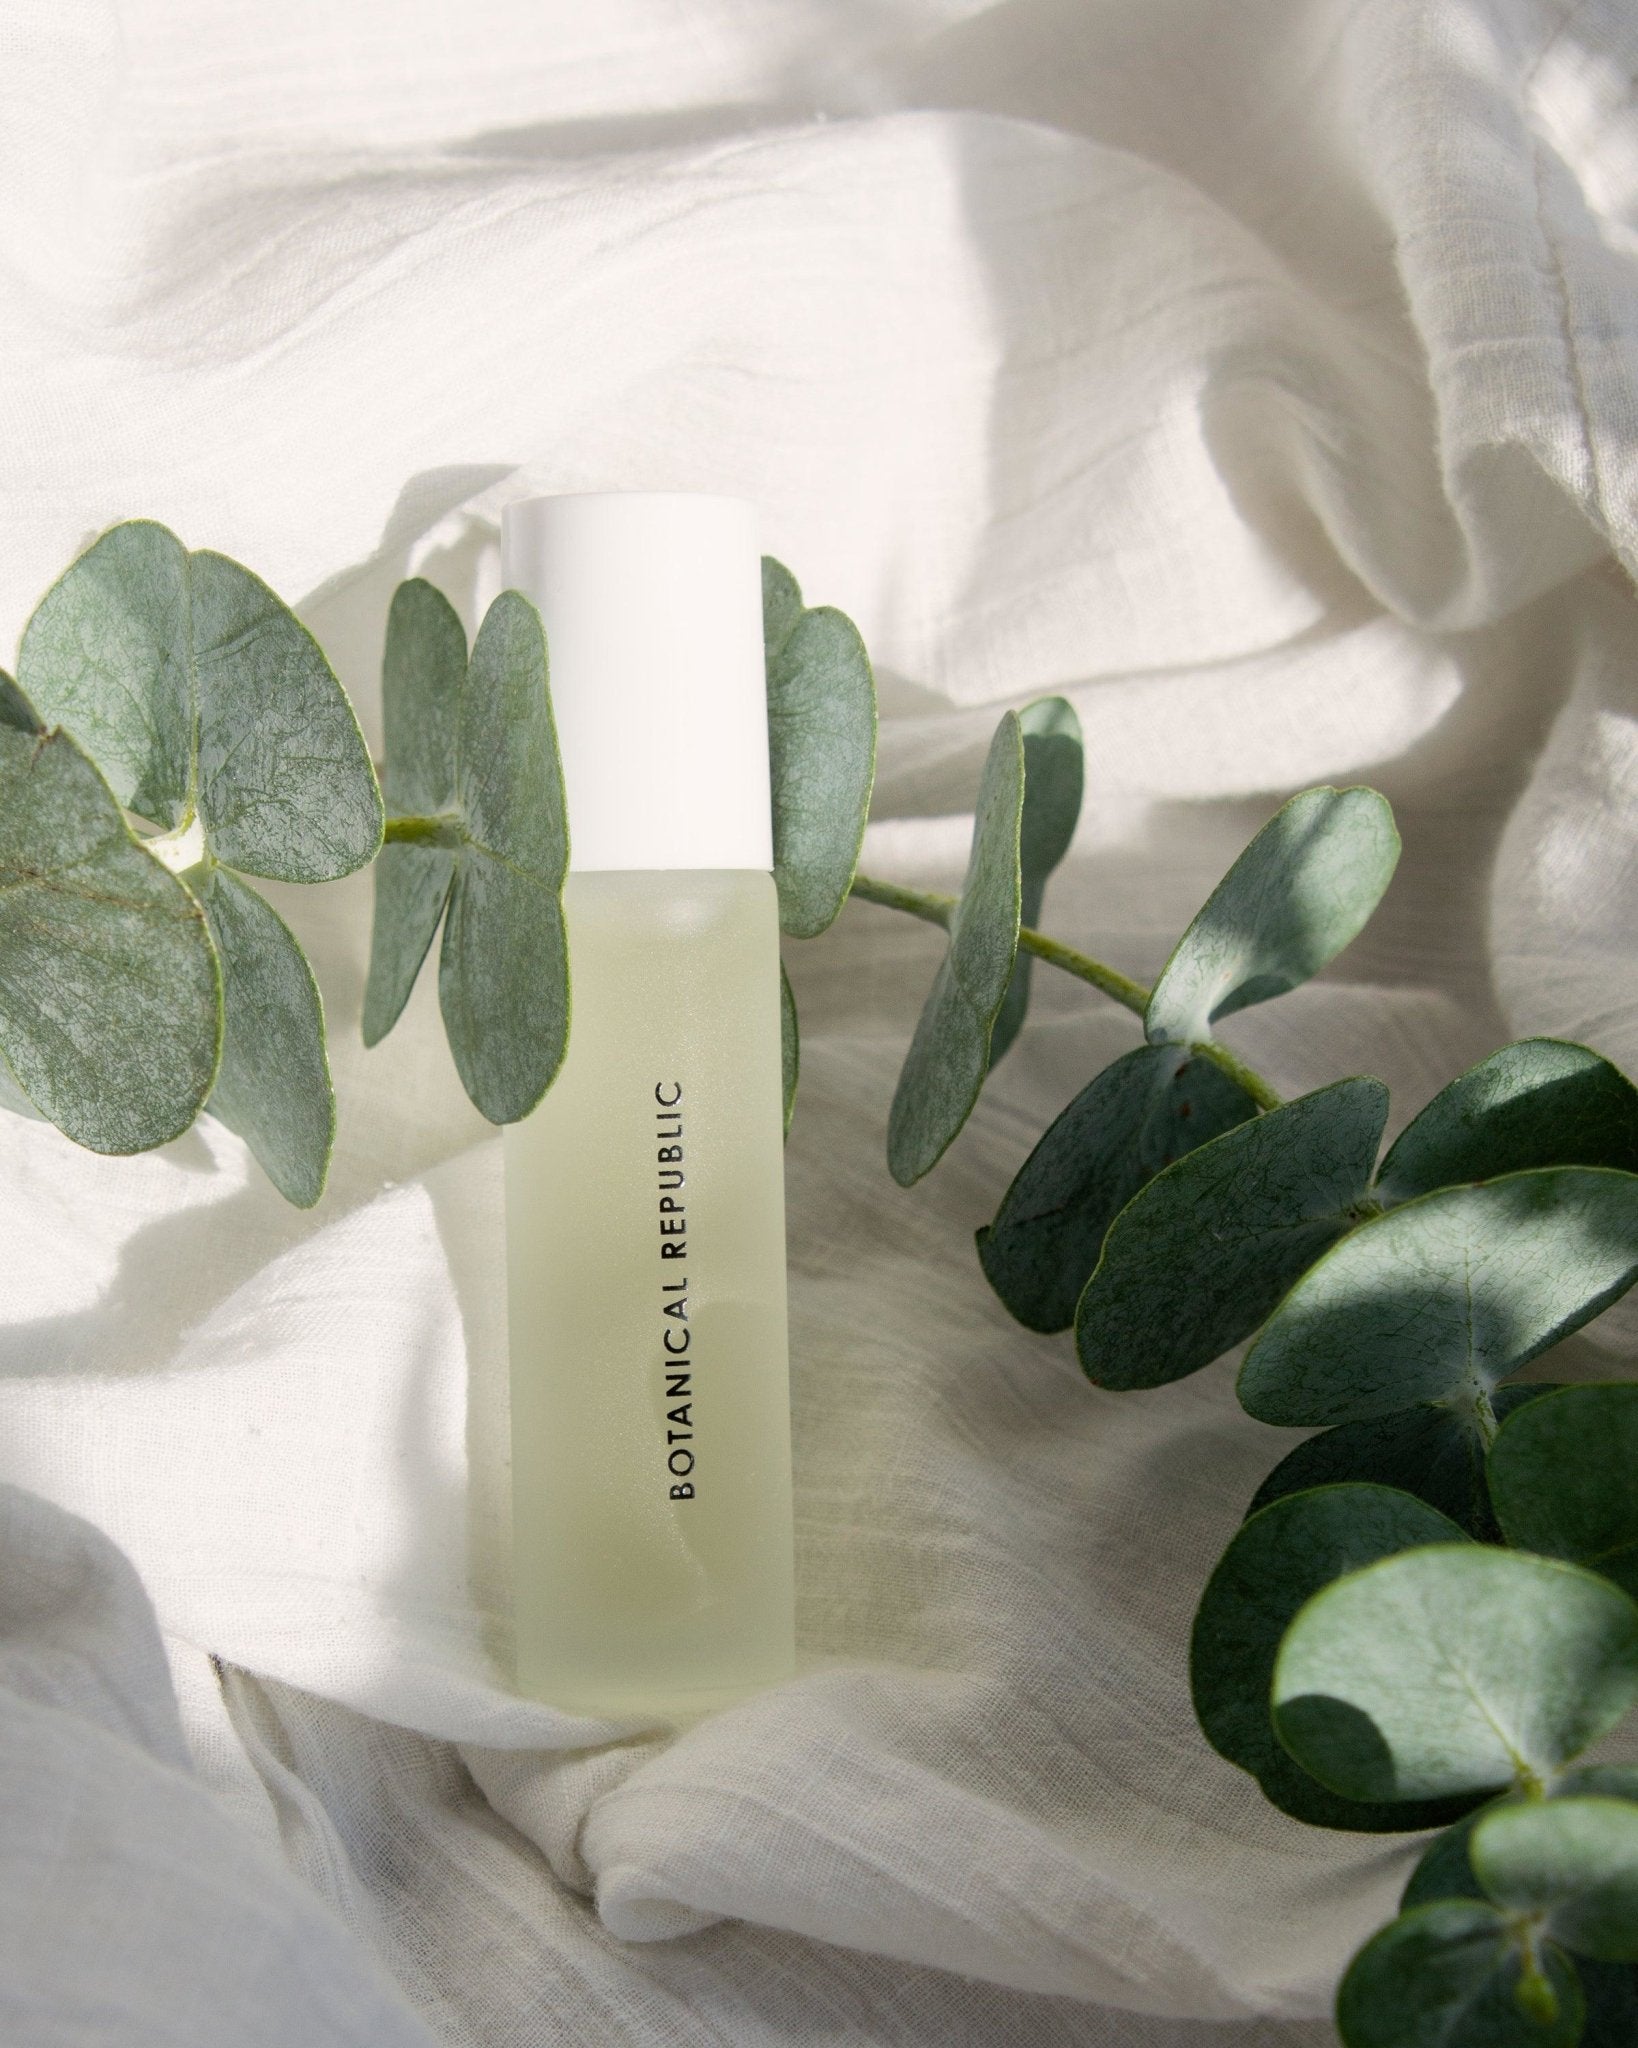  Immunity Aromatherapy Blend by Botanical Republic Botanical Republic Perfumarie